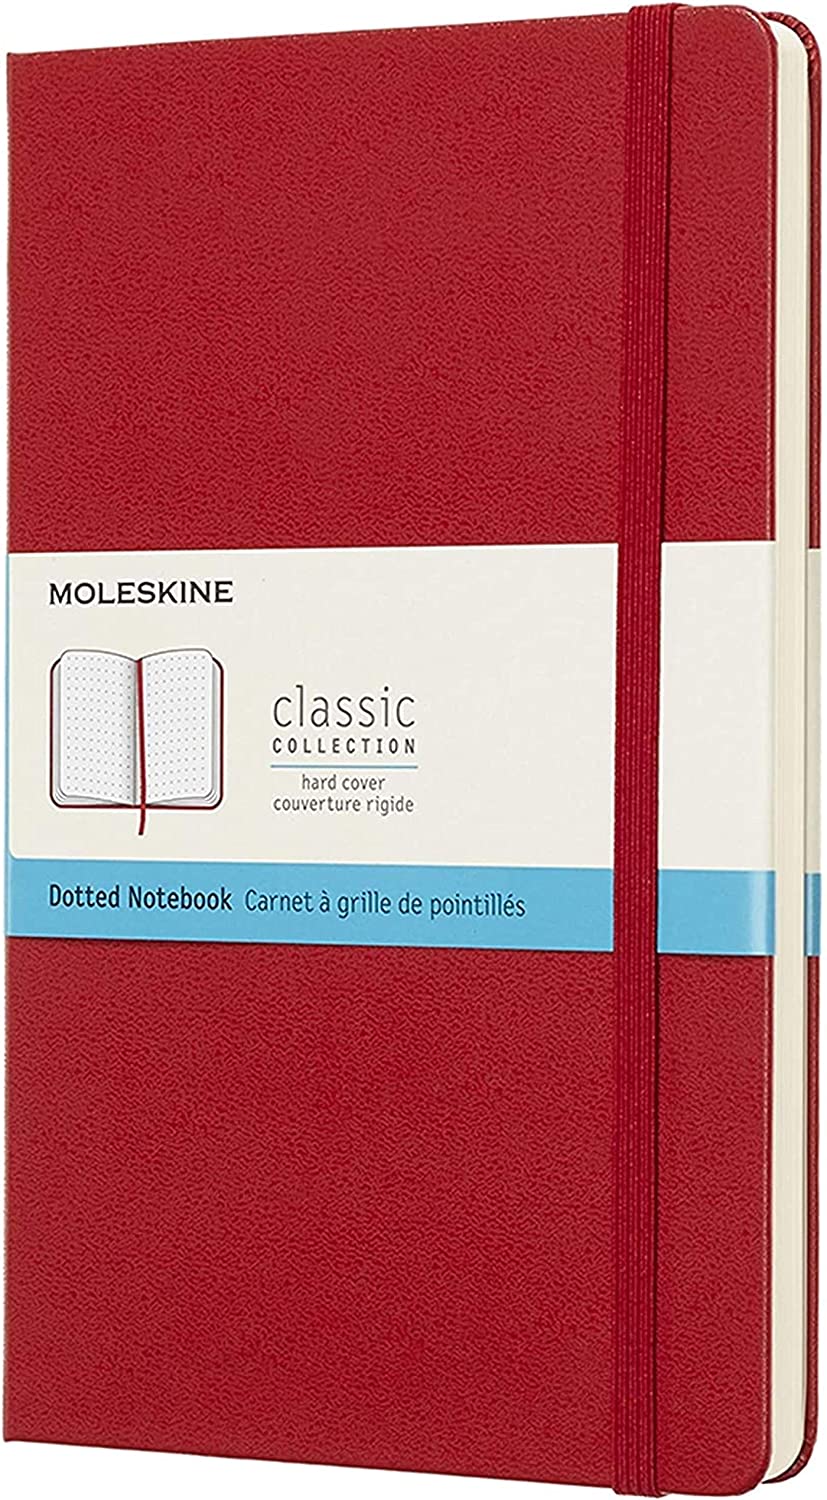 Moleskine Papir Large / Red / Hardcover Moleskine Classic notesbog - Dotted